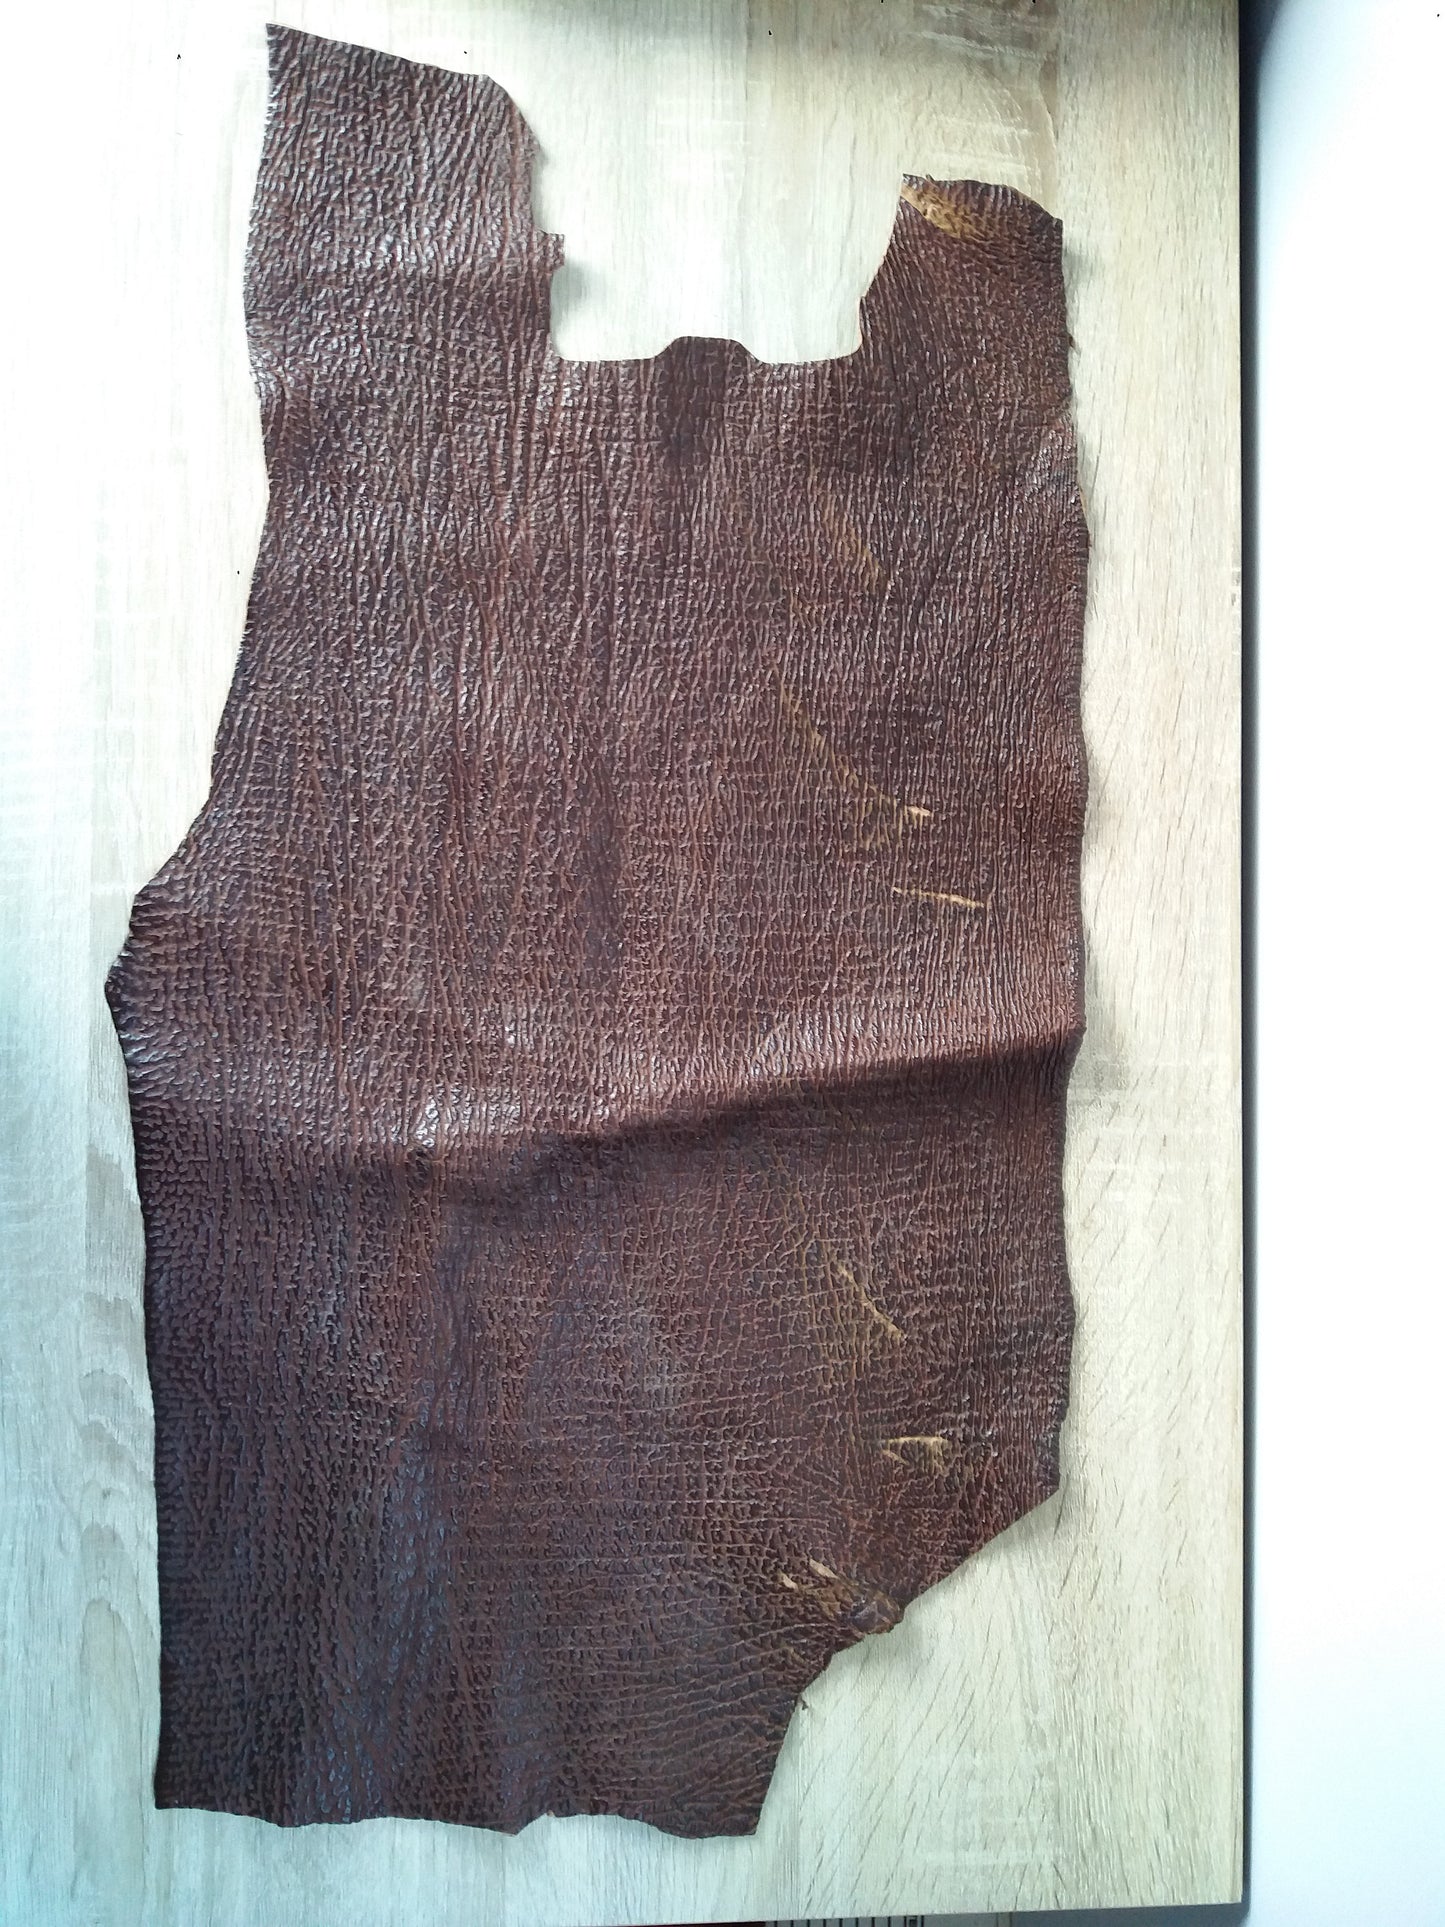 Textured Brown Scrap Leather Piece